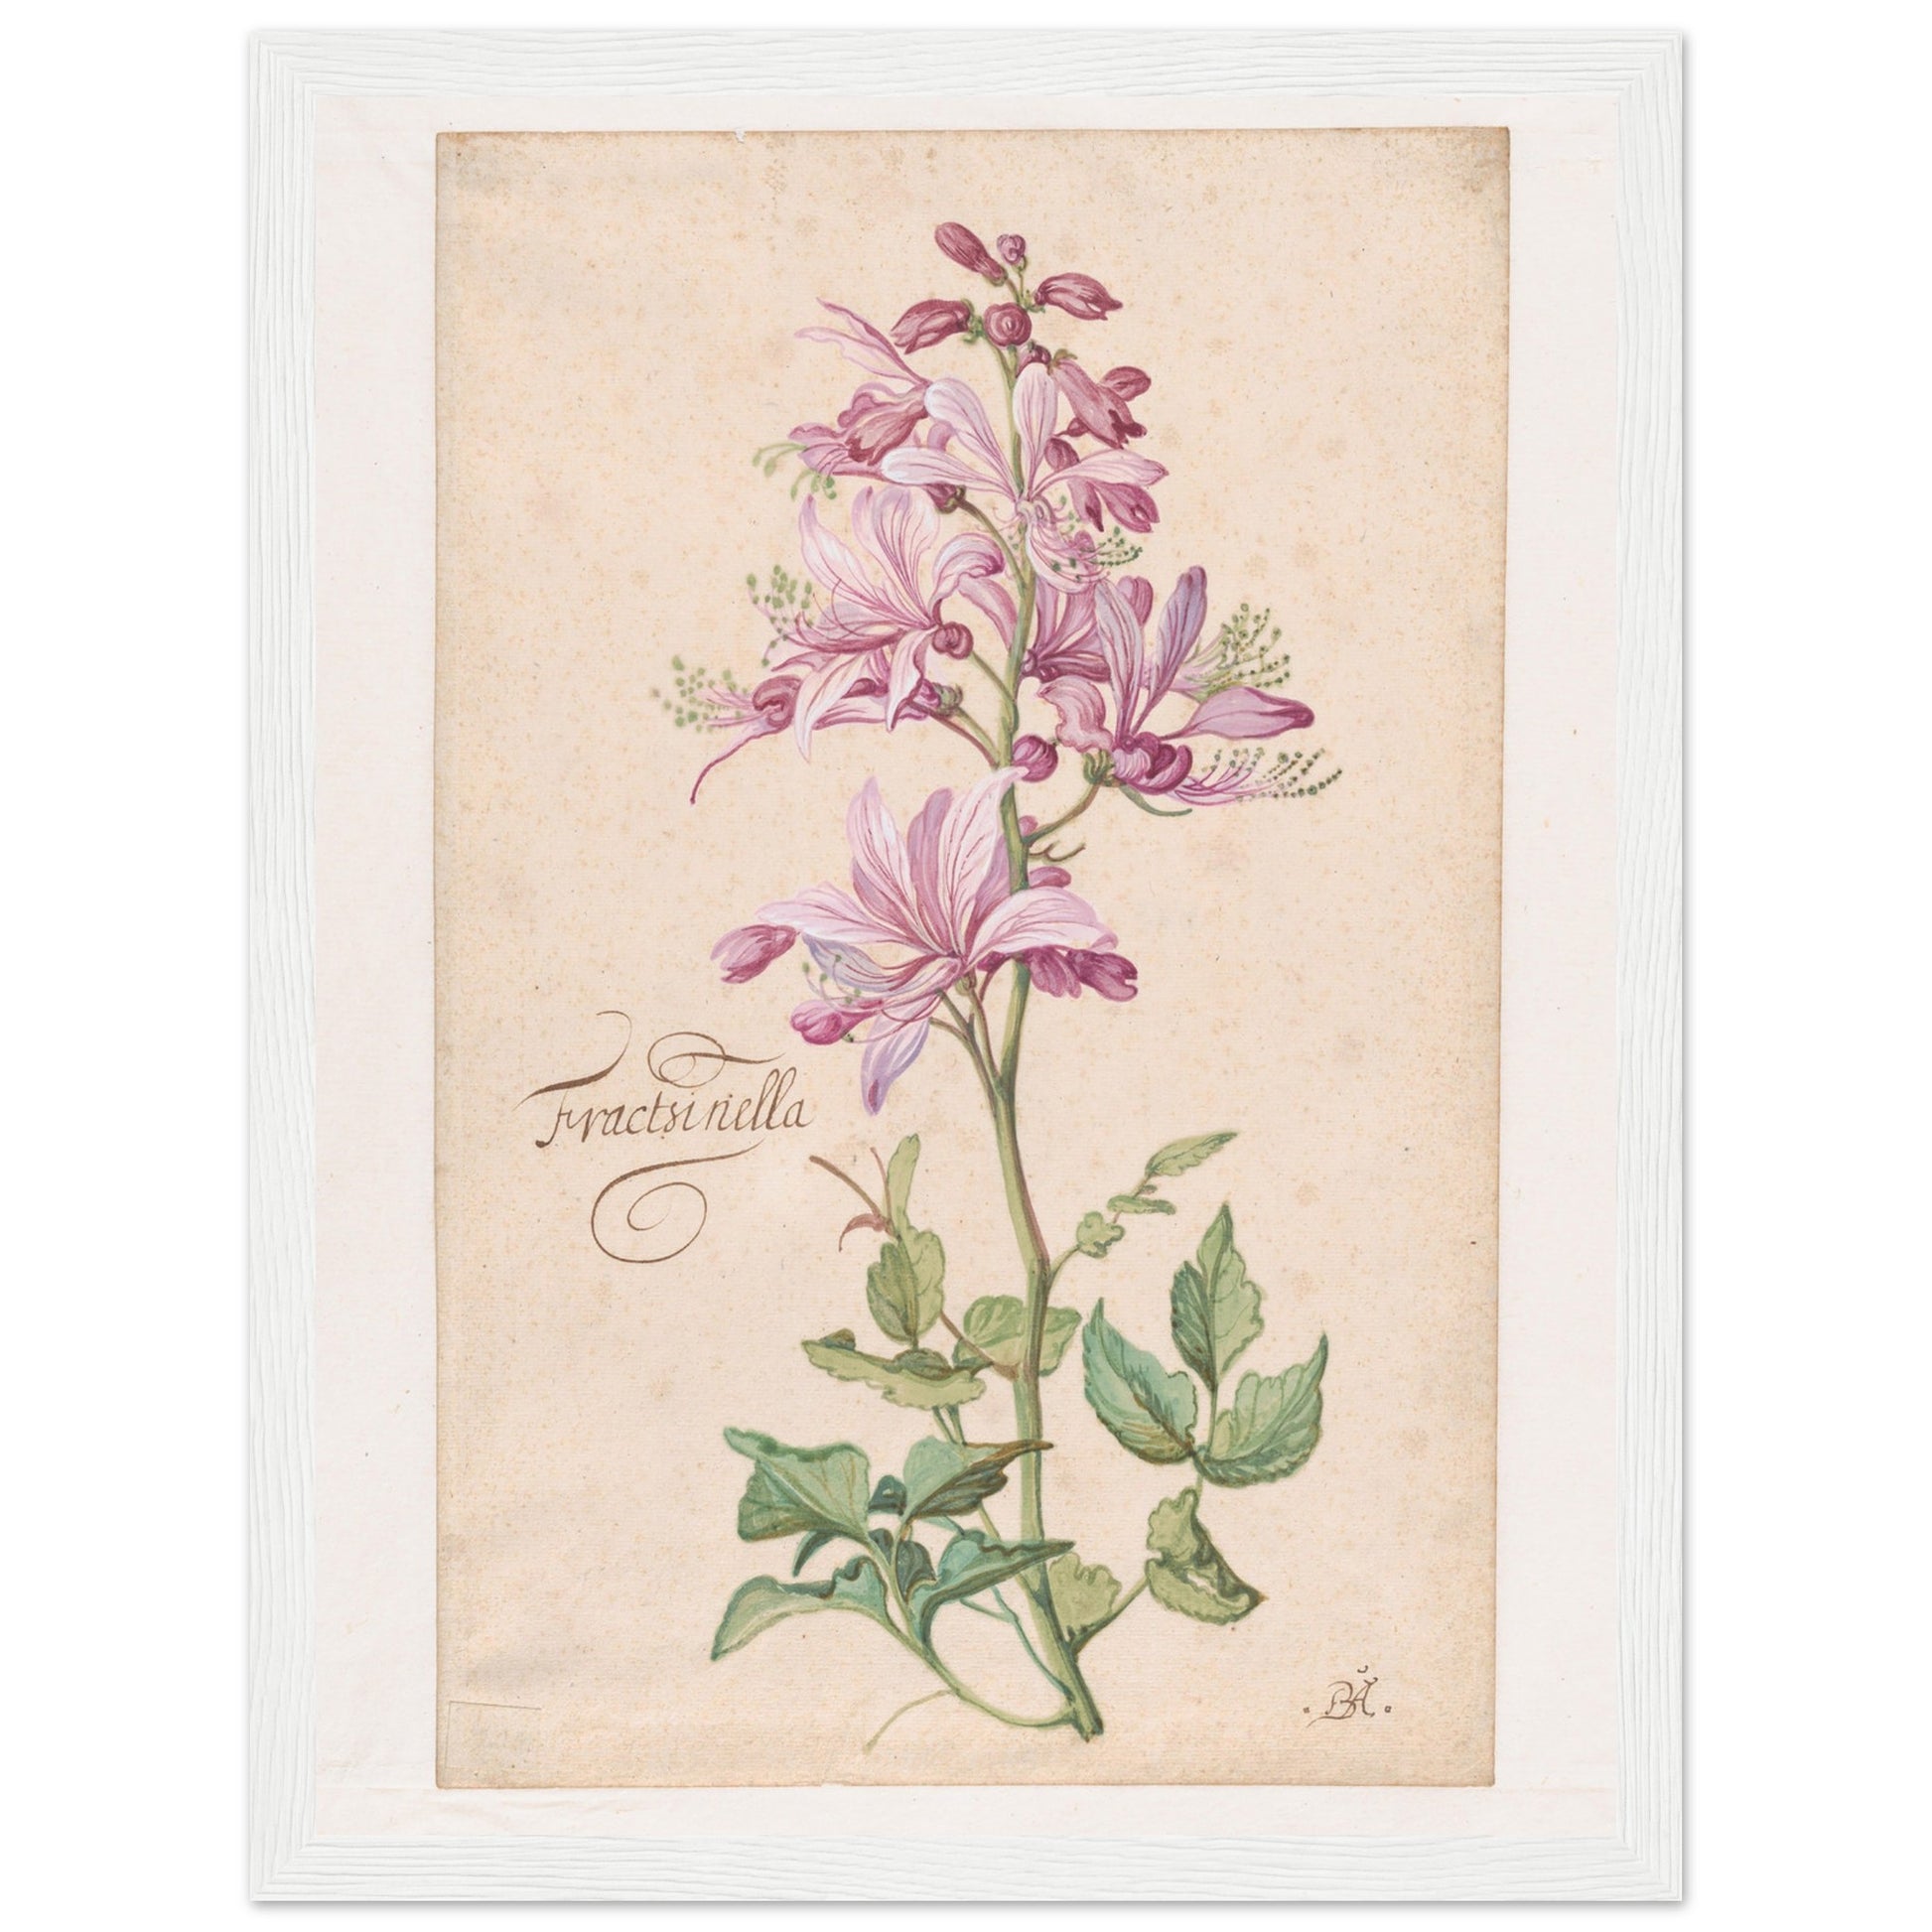 Dictamnus Flower art print in a white frame | By Print Room Ltd